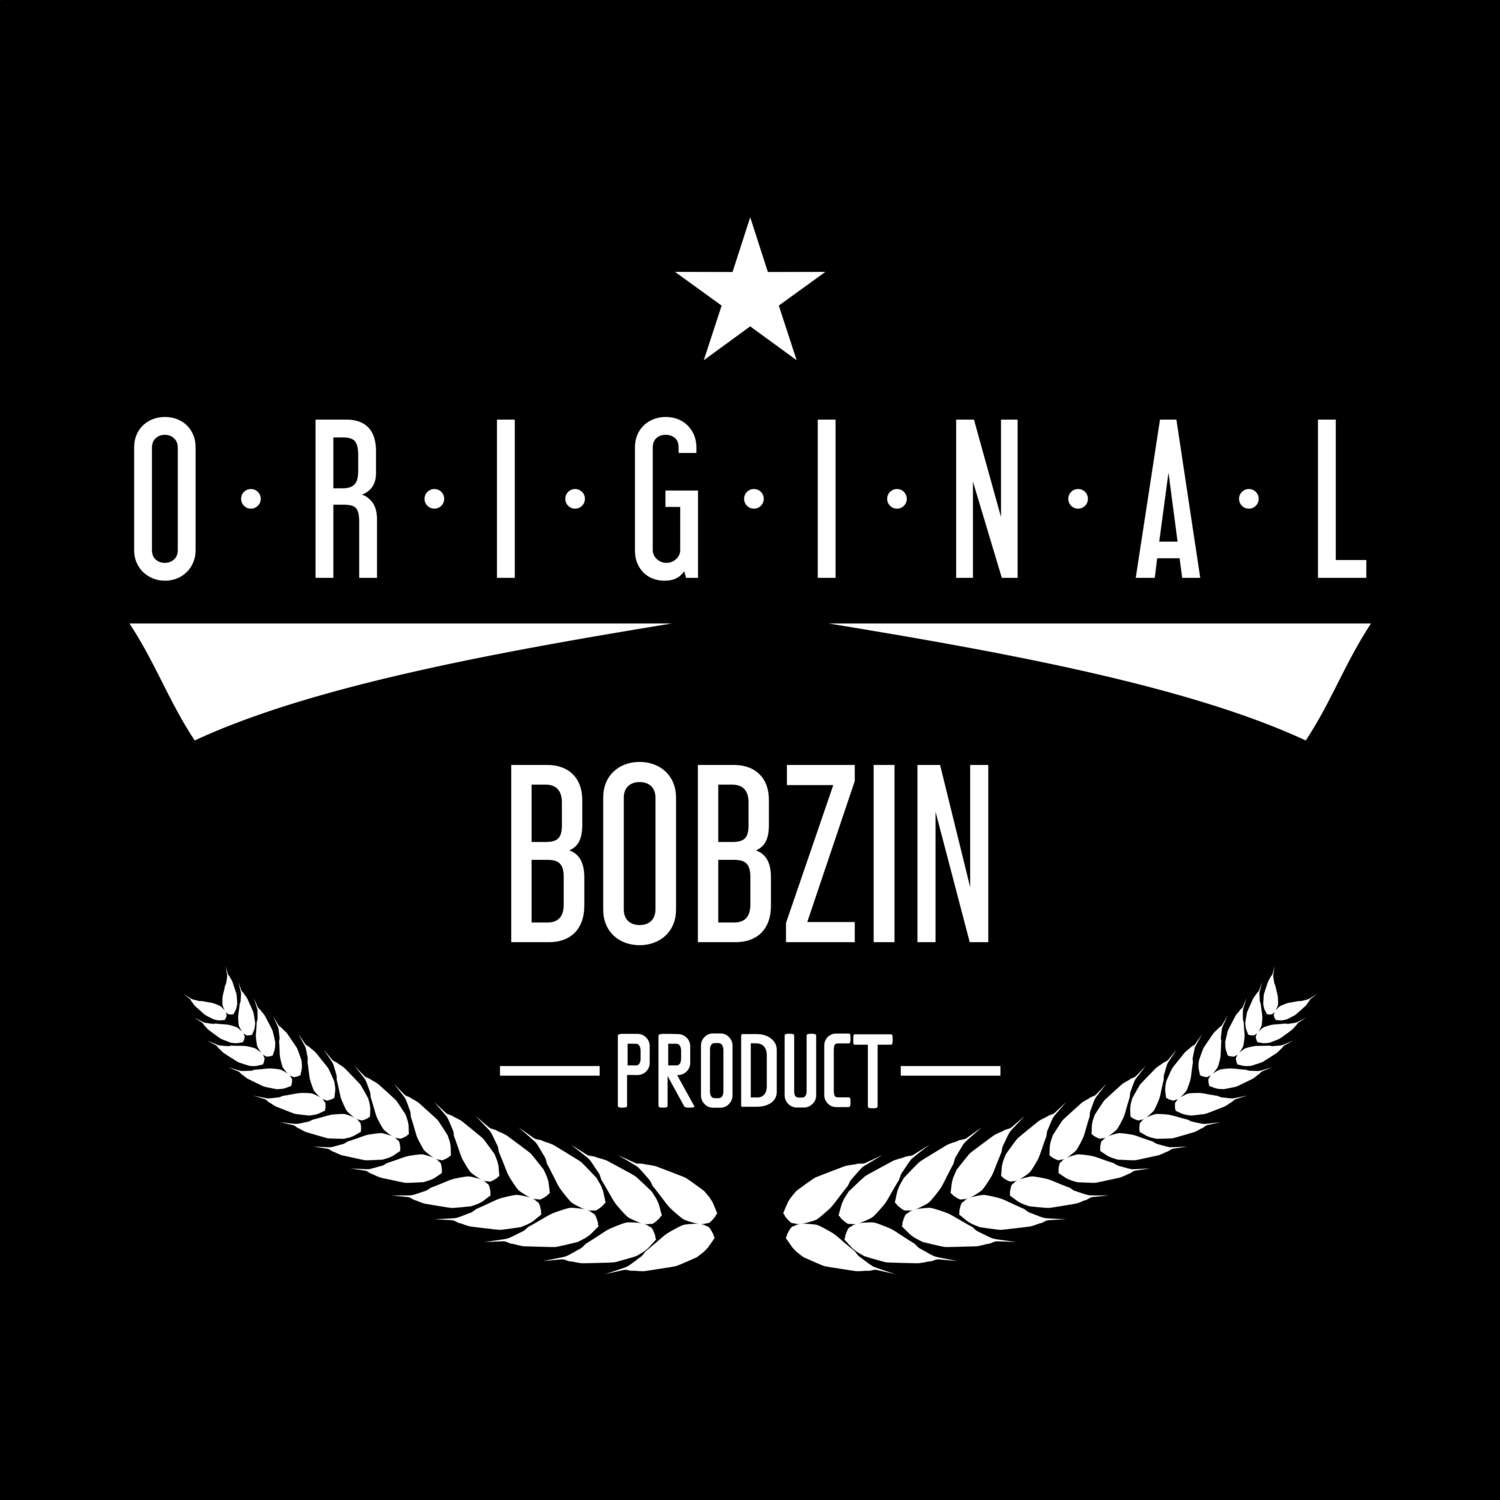 Bobzin T-Shirt »Original Product«